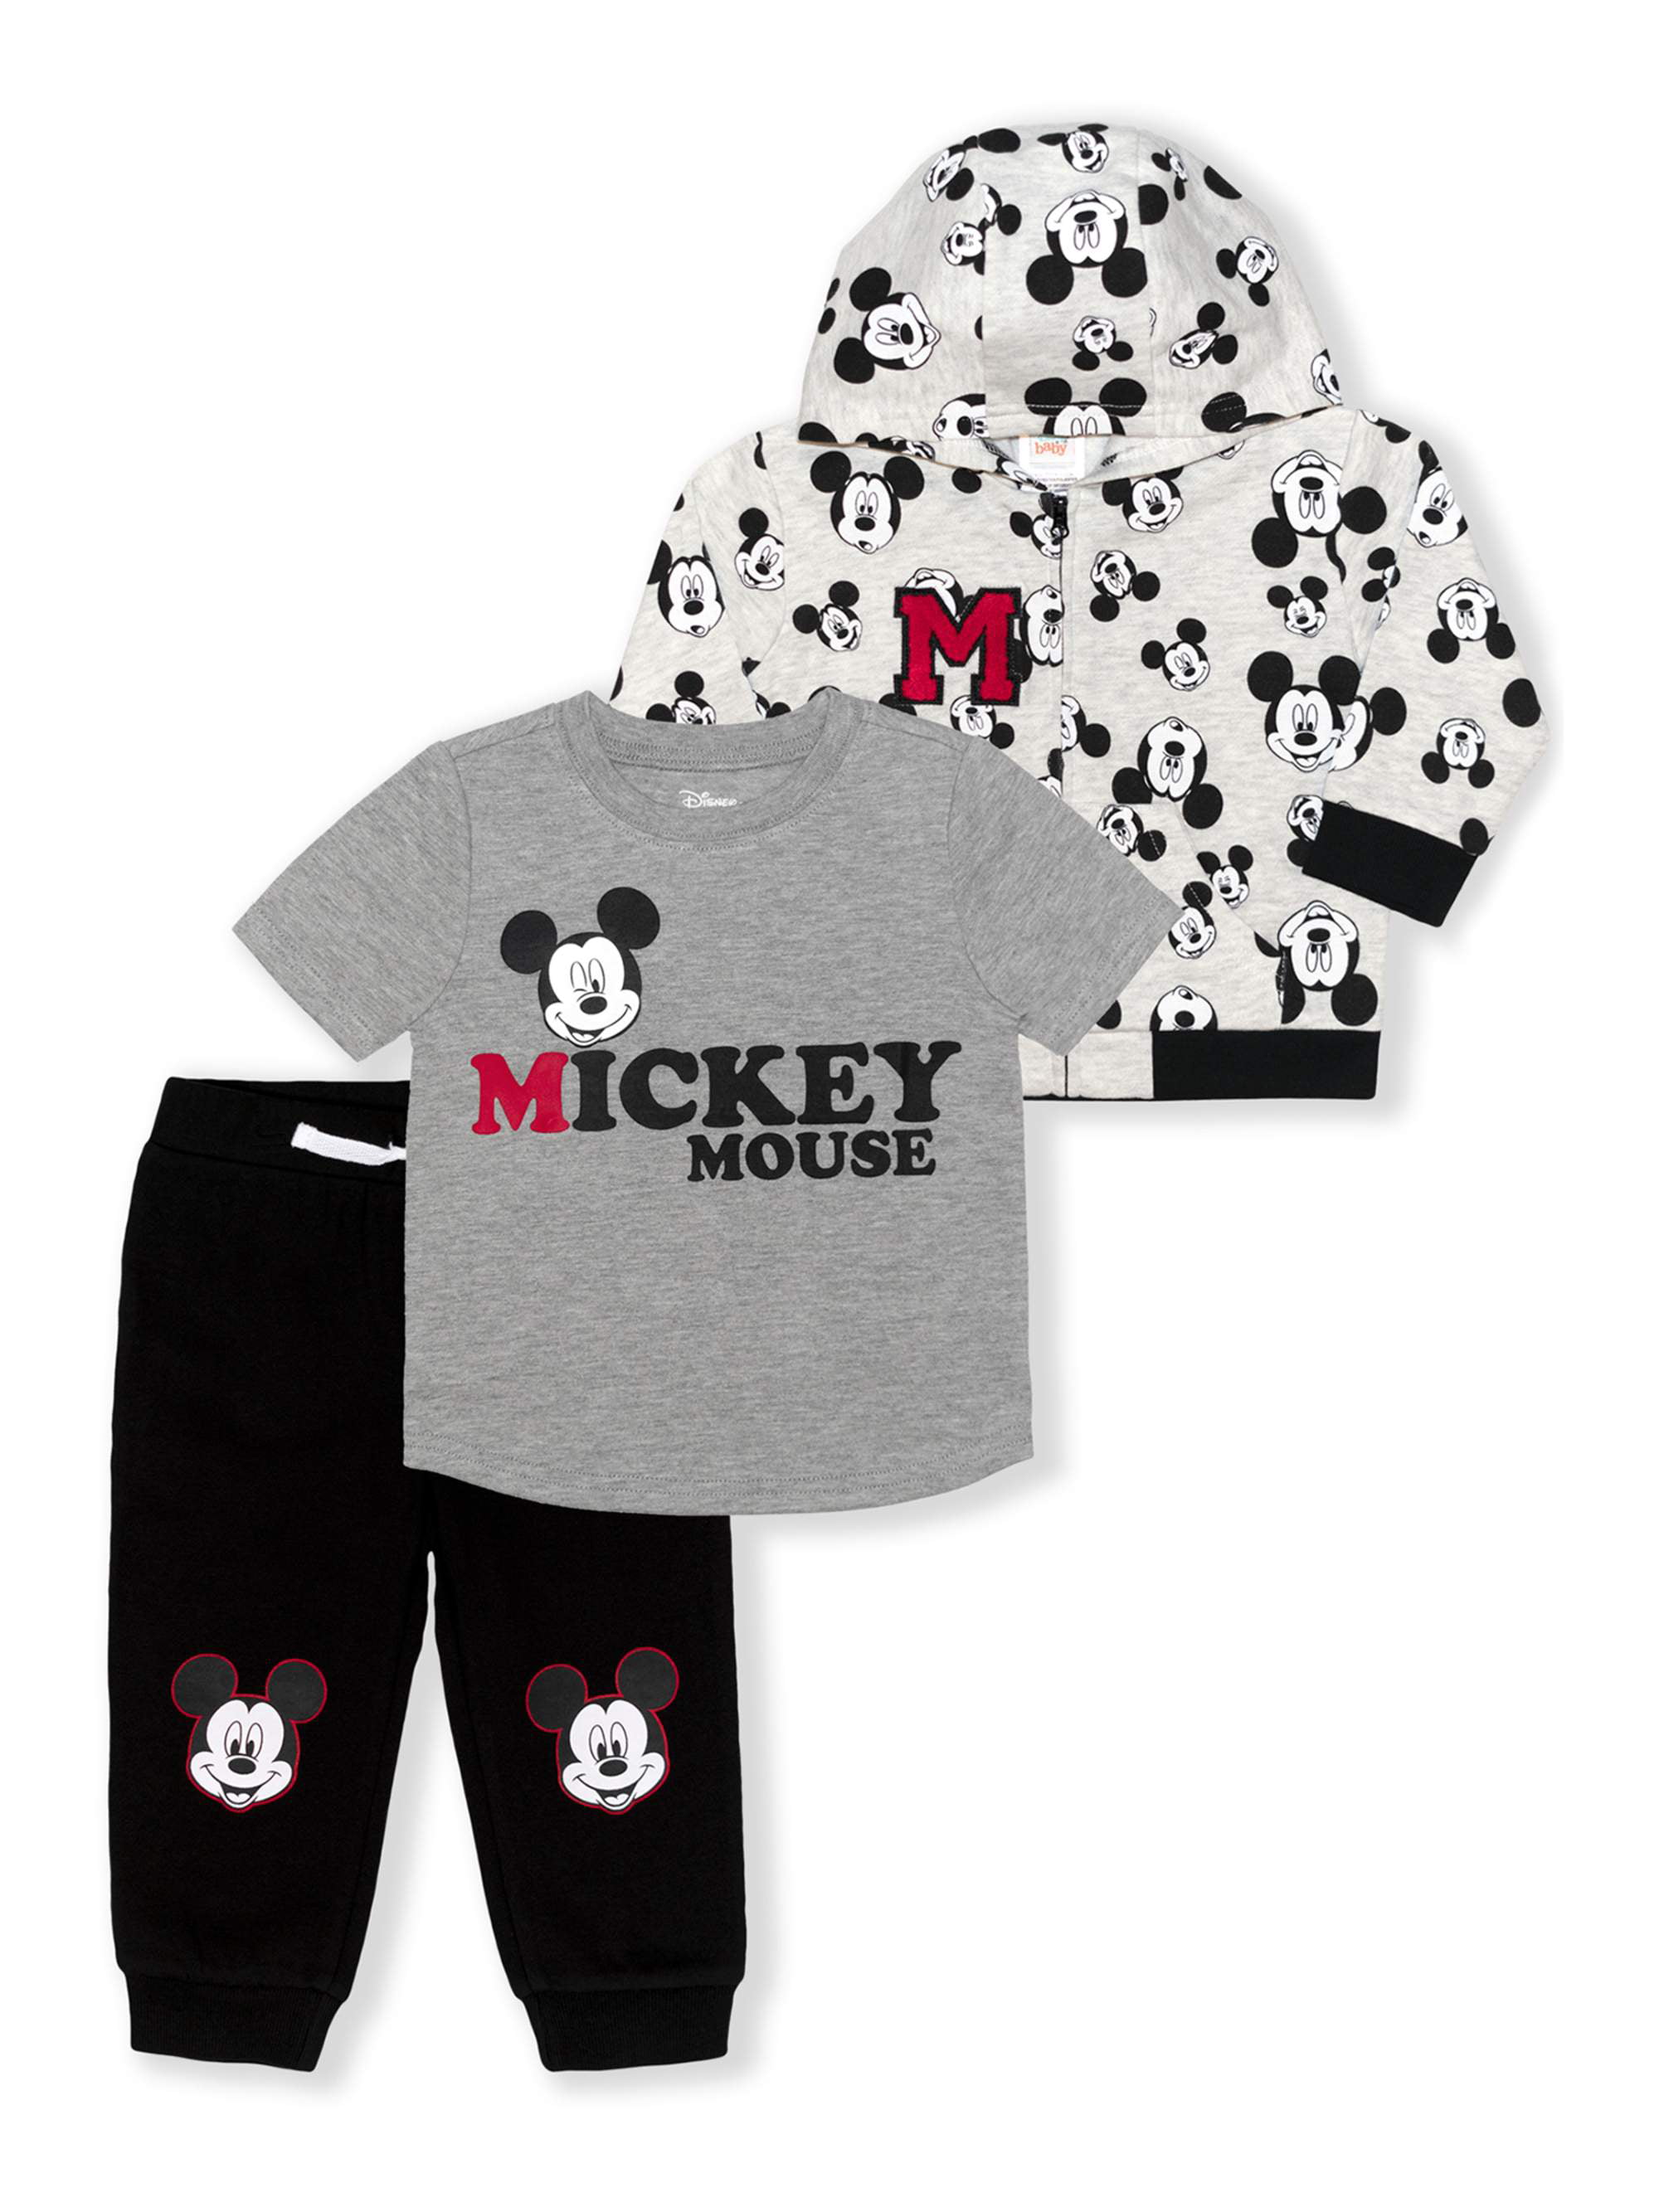 Disney Mickey Mouse Infant Boys 2-Piece Gray Plaid Woven Shirt & Pant Set